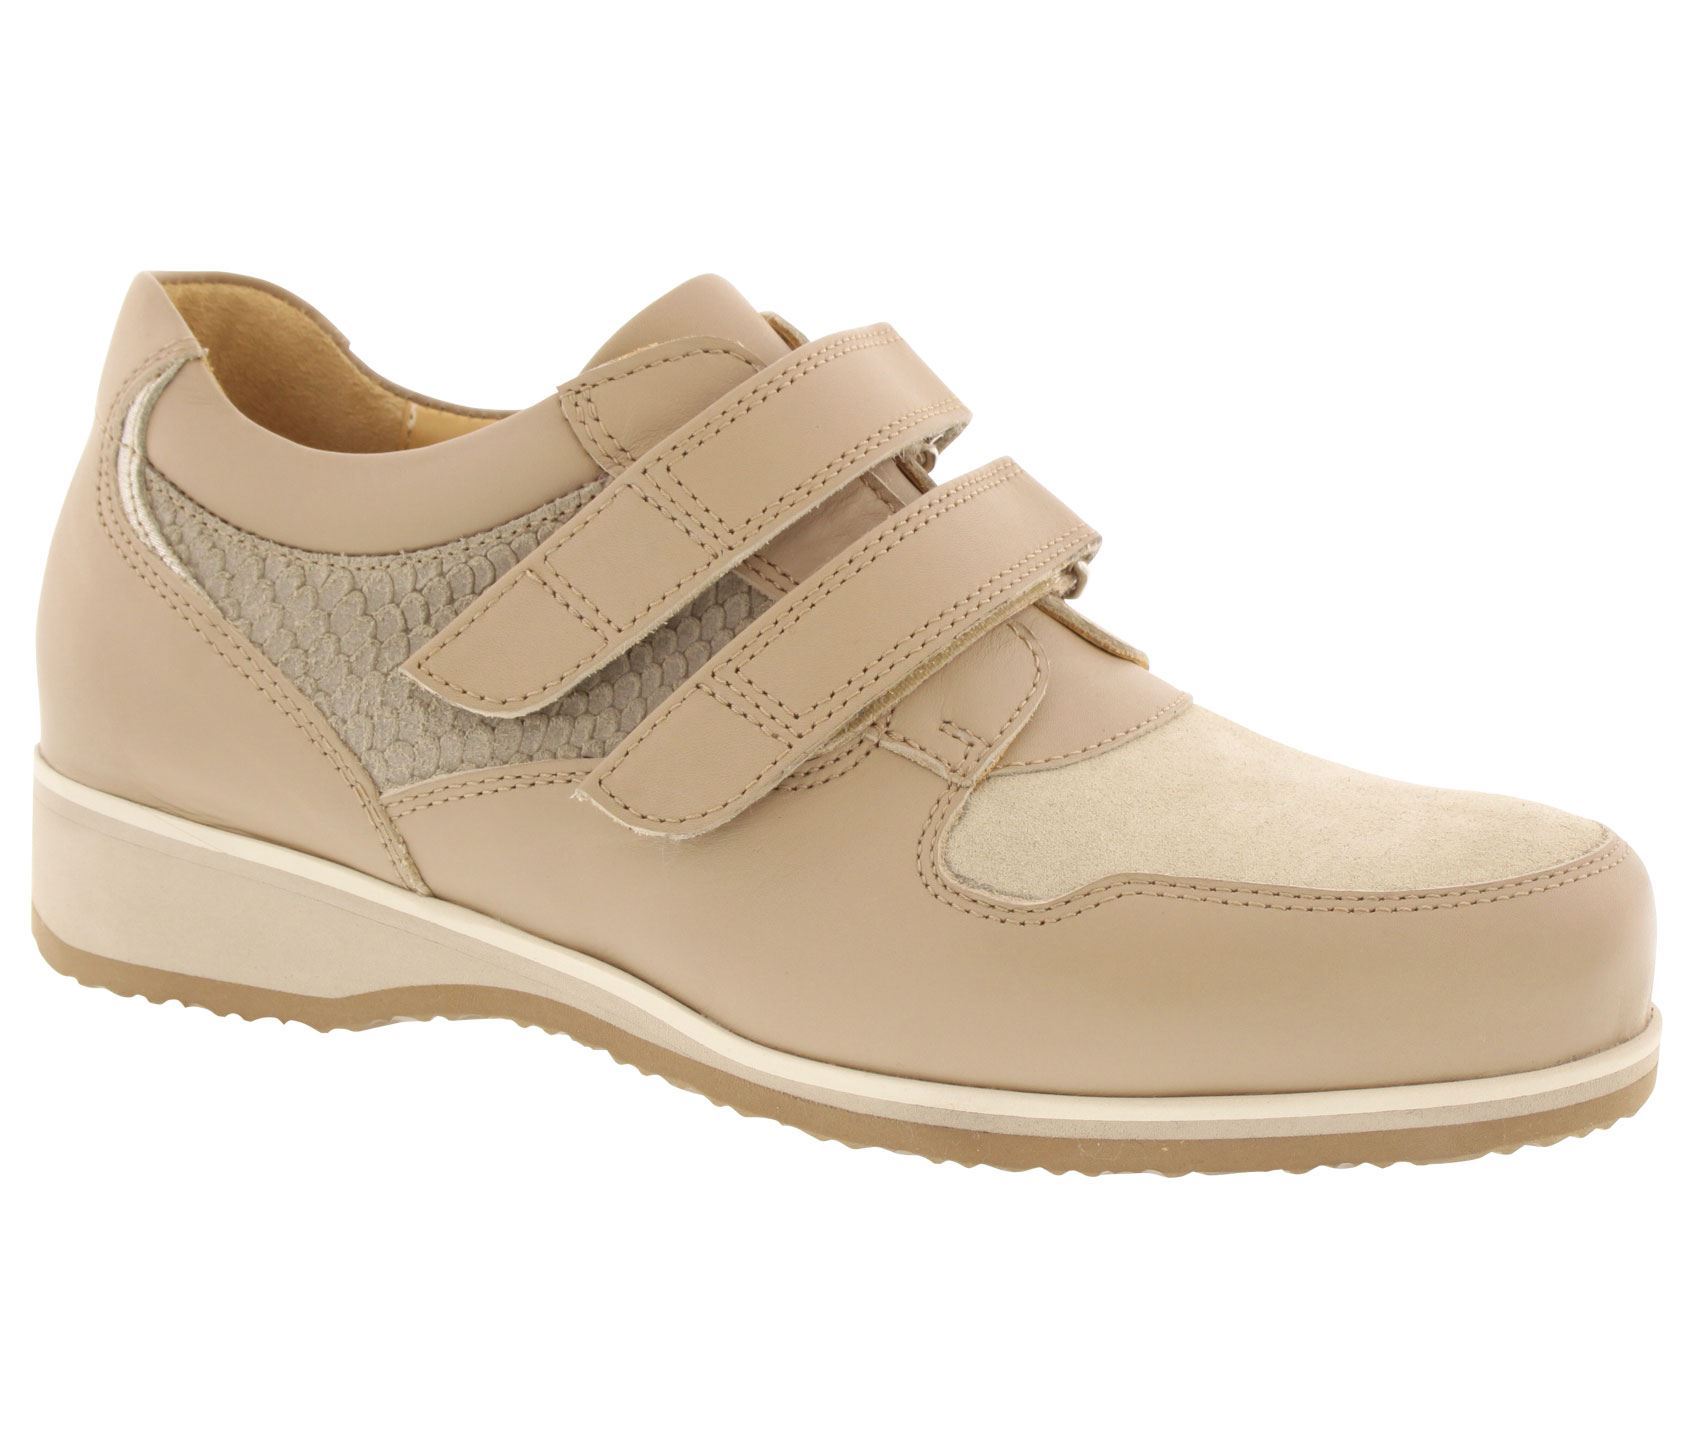 Piedro - Piedro 3450 54 1626 orthopaedic women shoes